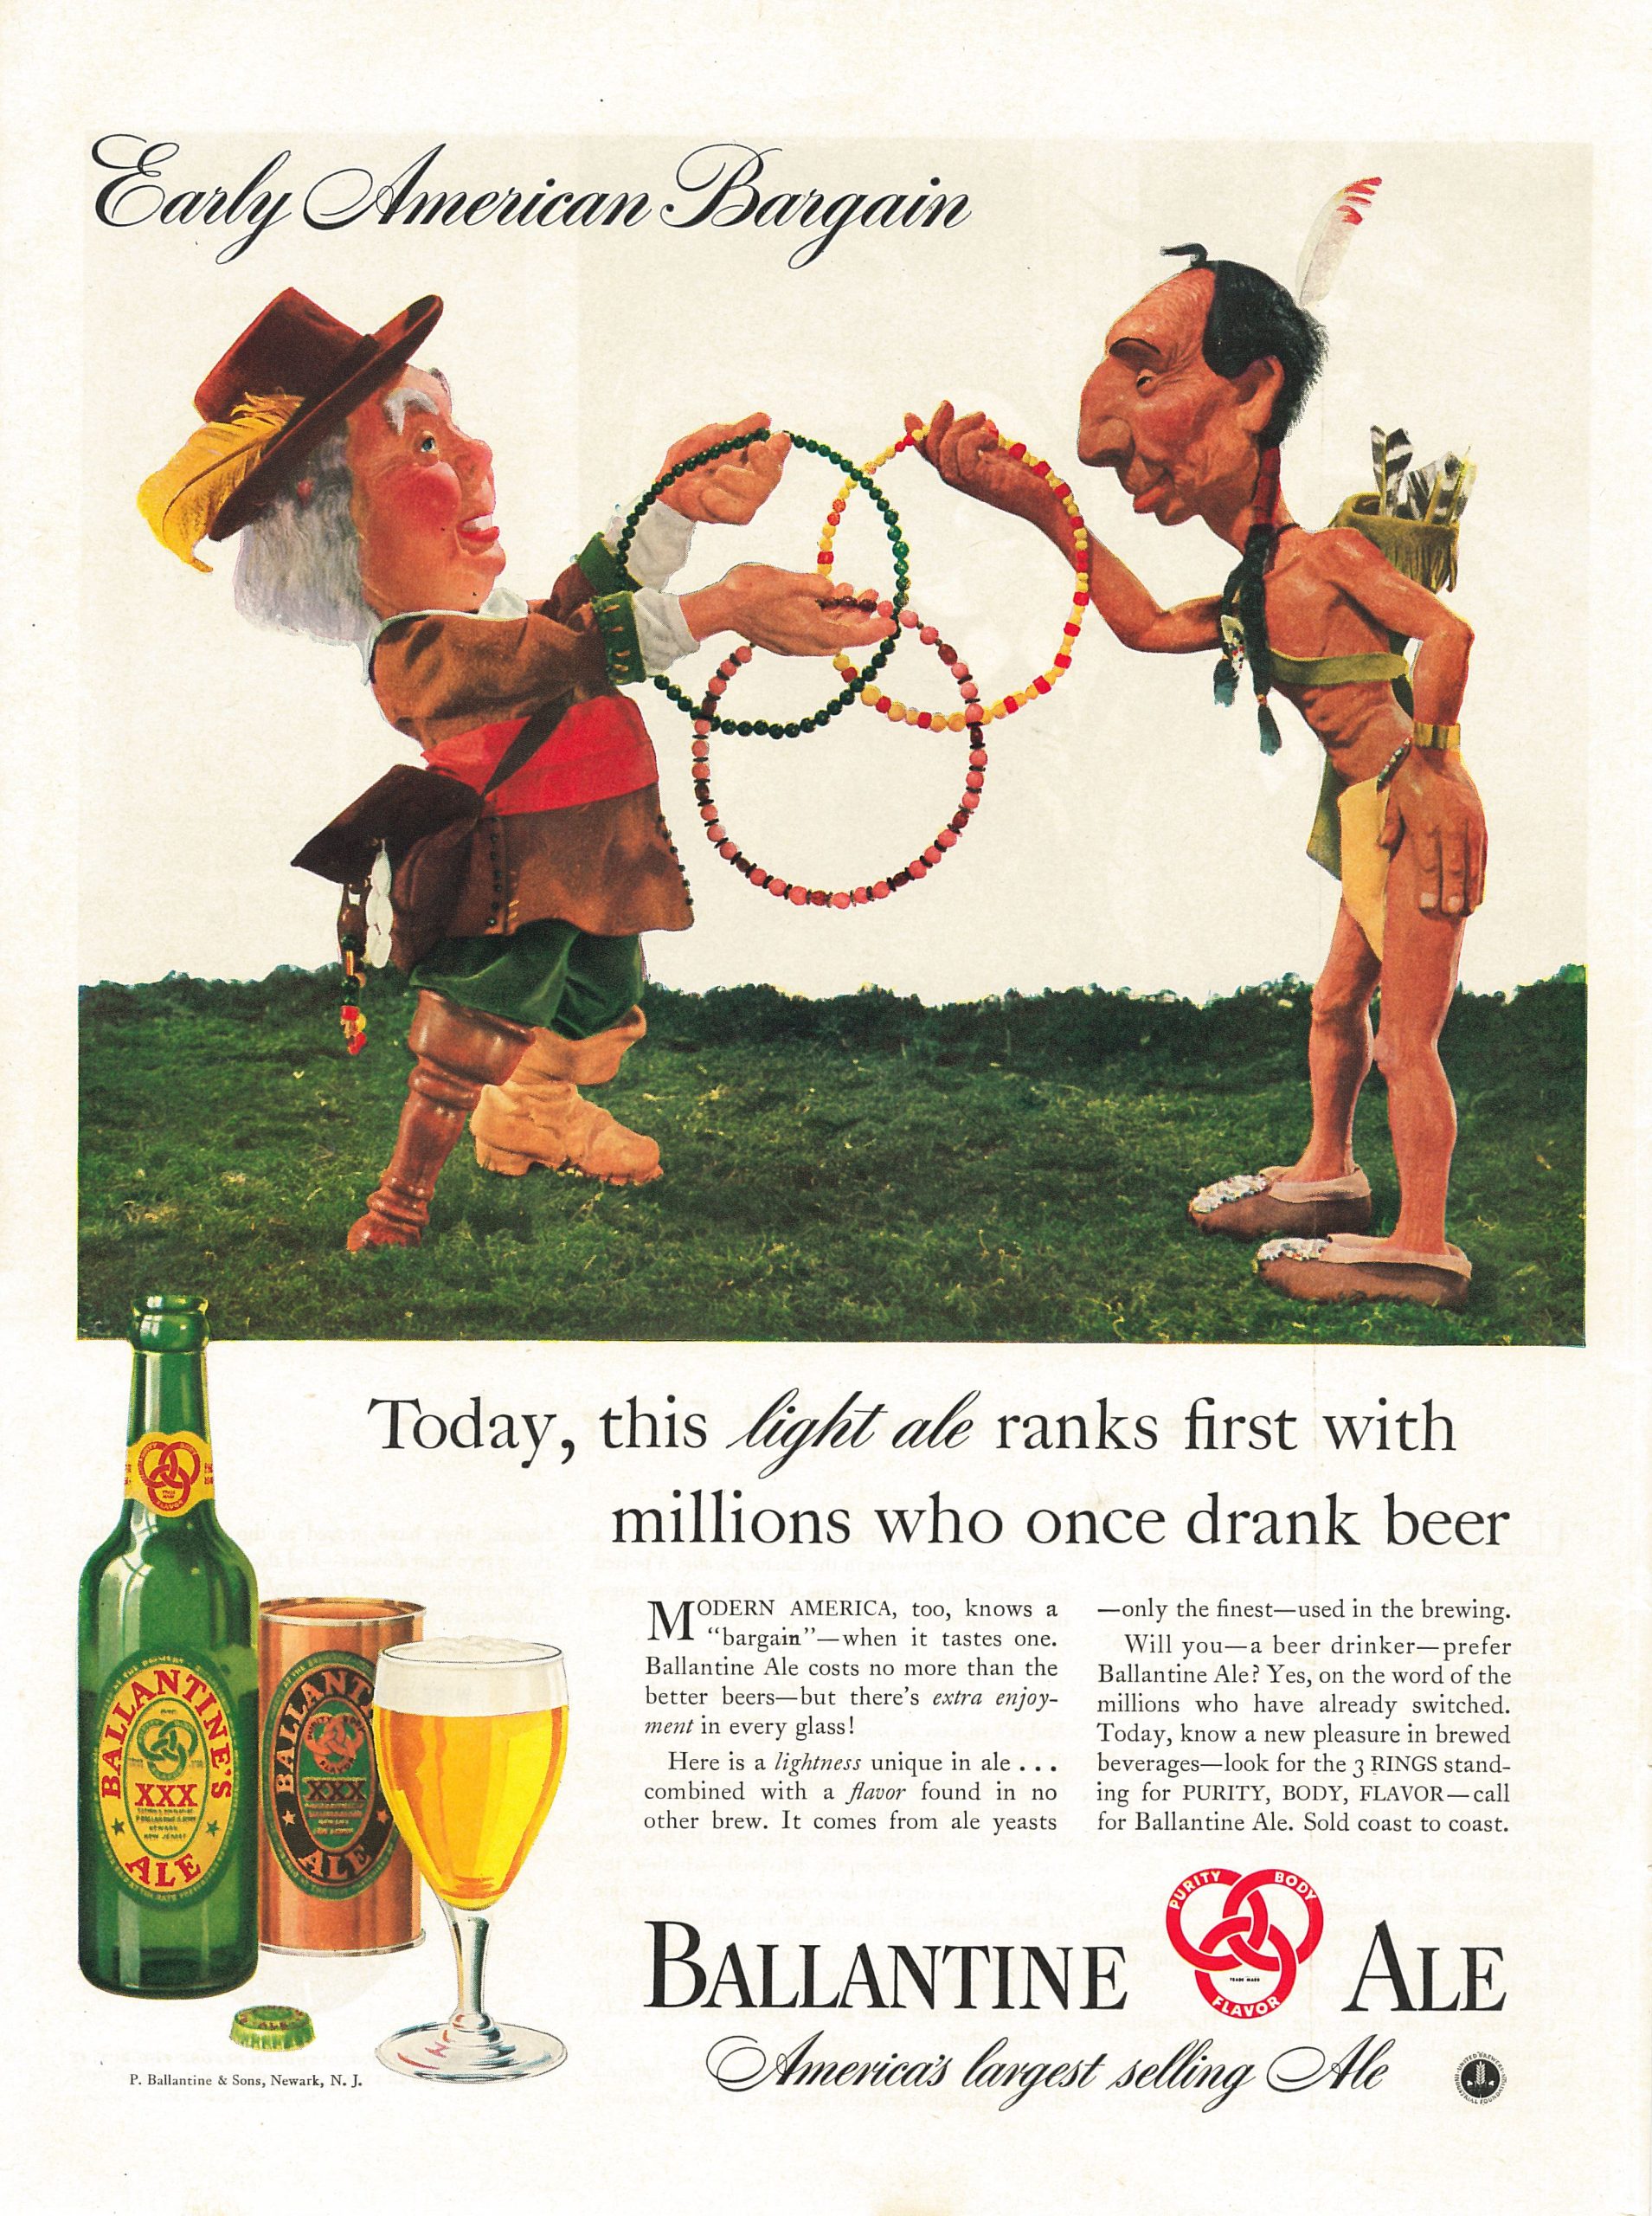 Ballantine Ale advertisement, 1941